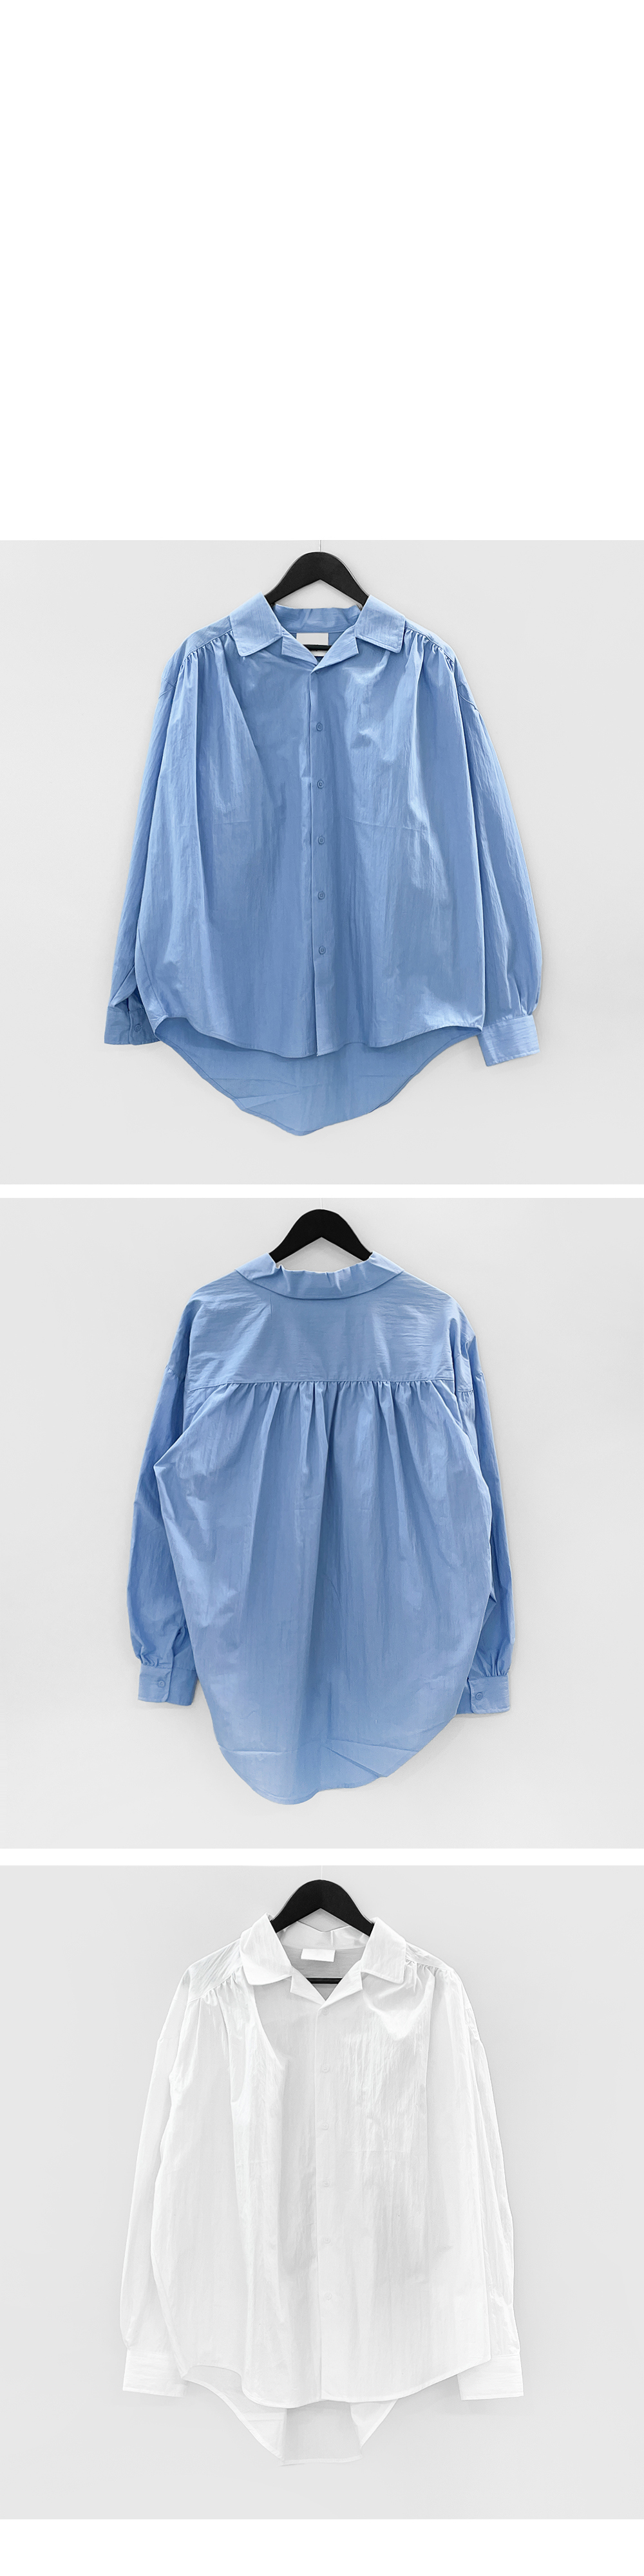 mini skirt blue color image-S1L9